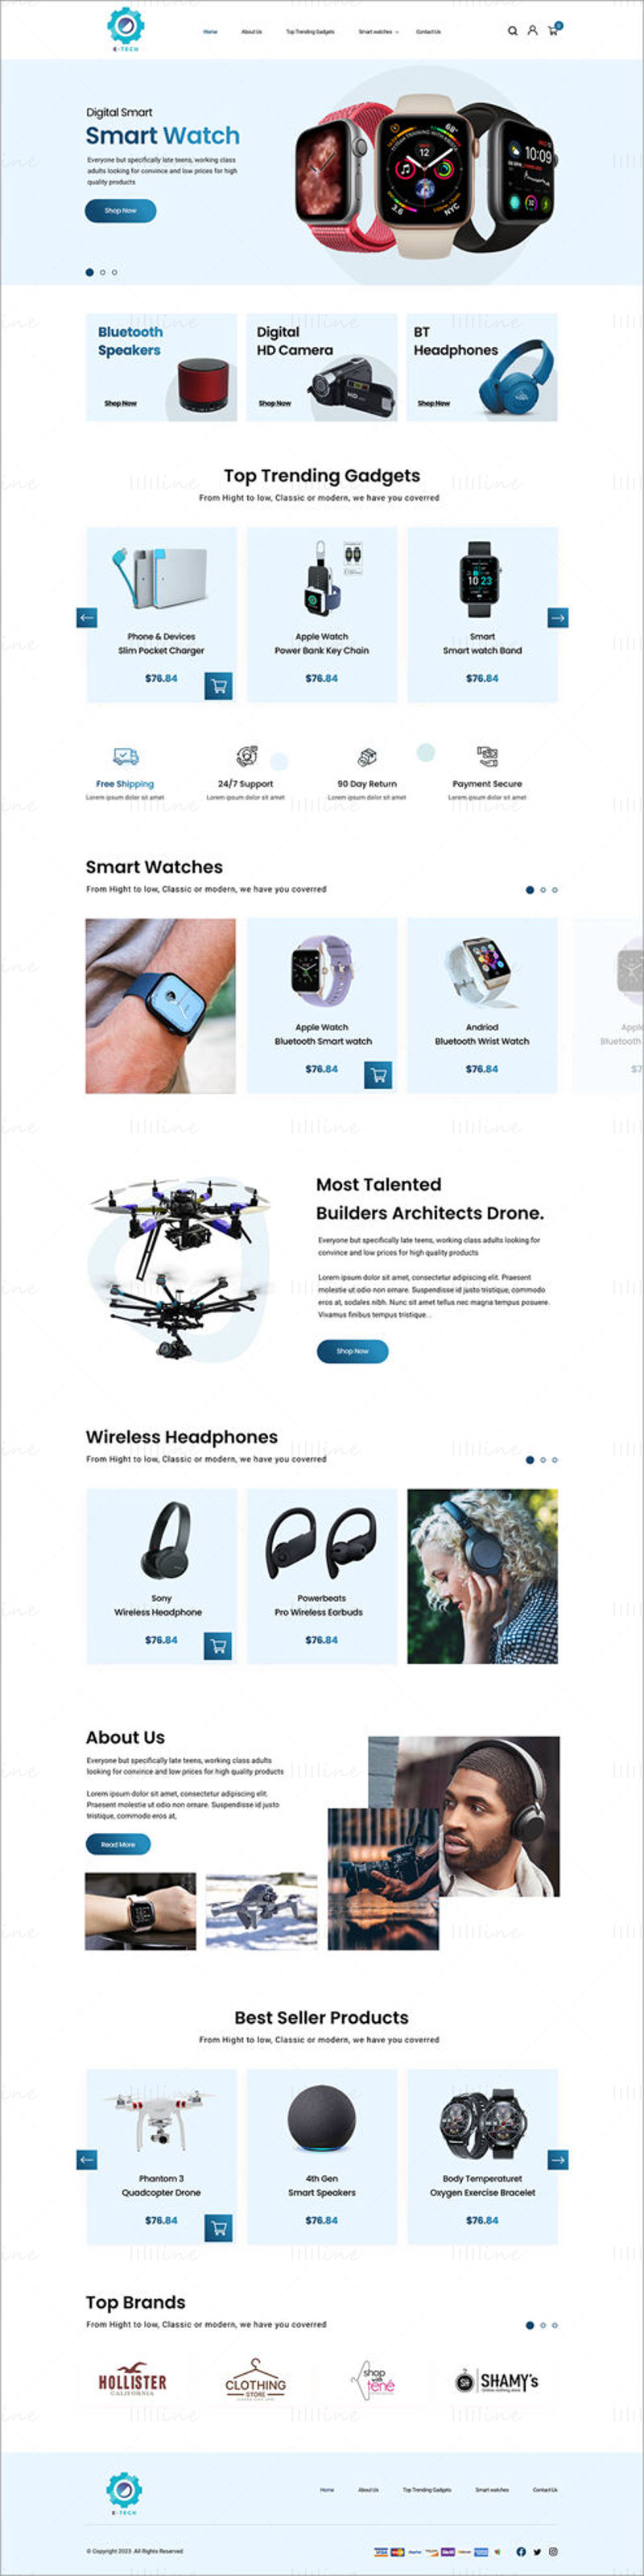 E-Tech eCommerce website landing page template - UI Adobe XD